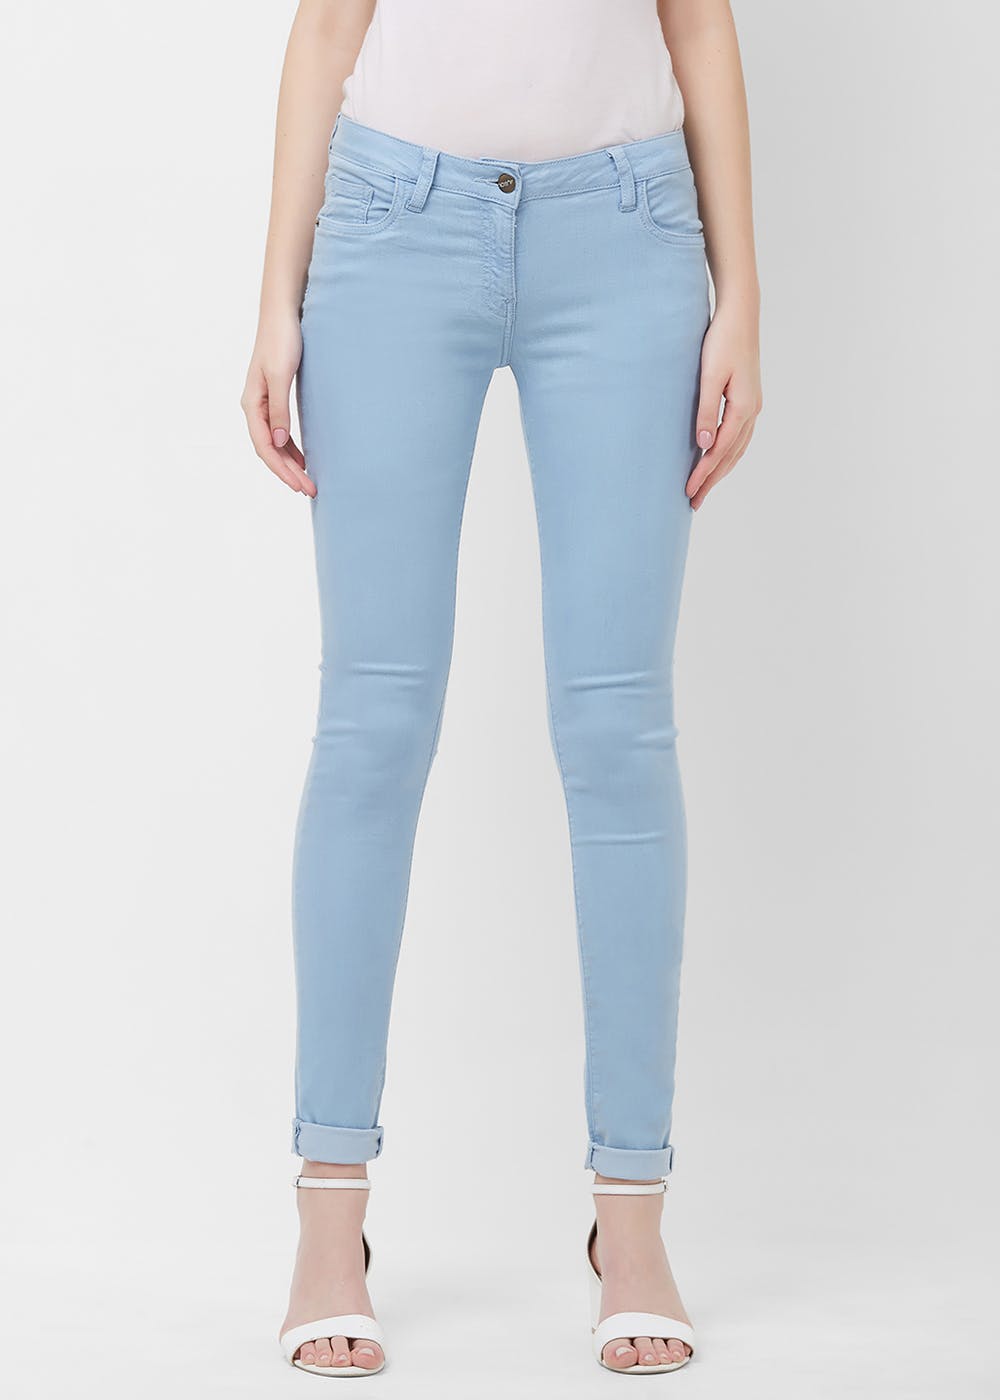 Get Blue Jeans at ₹ 934 | LBB Shop